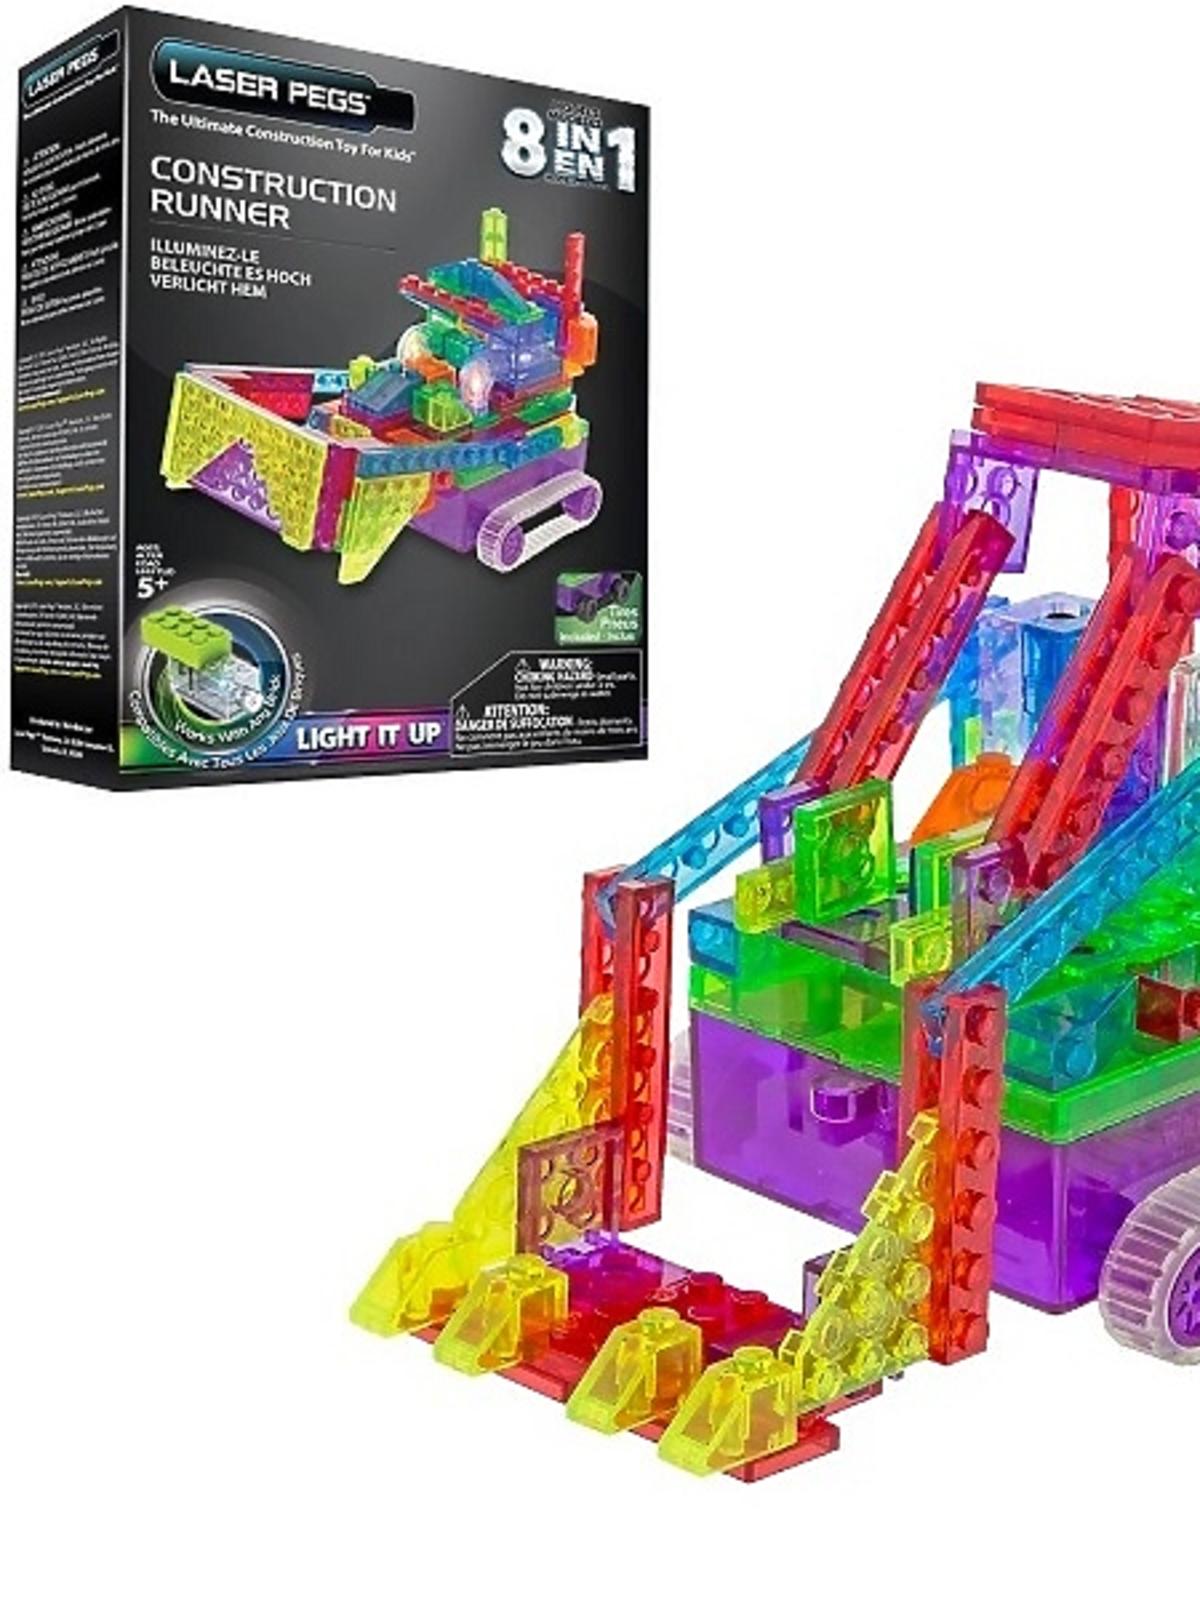 Laser Pegs Construction Runner koparka - katalog produktów dla dzieci na Babyonlinepl.jpg